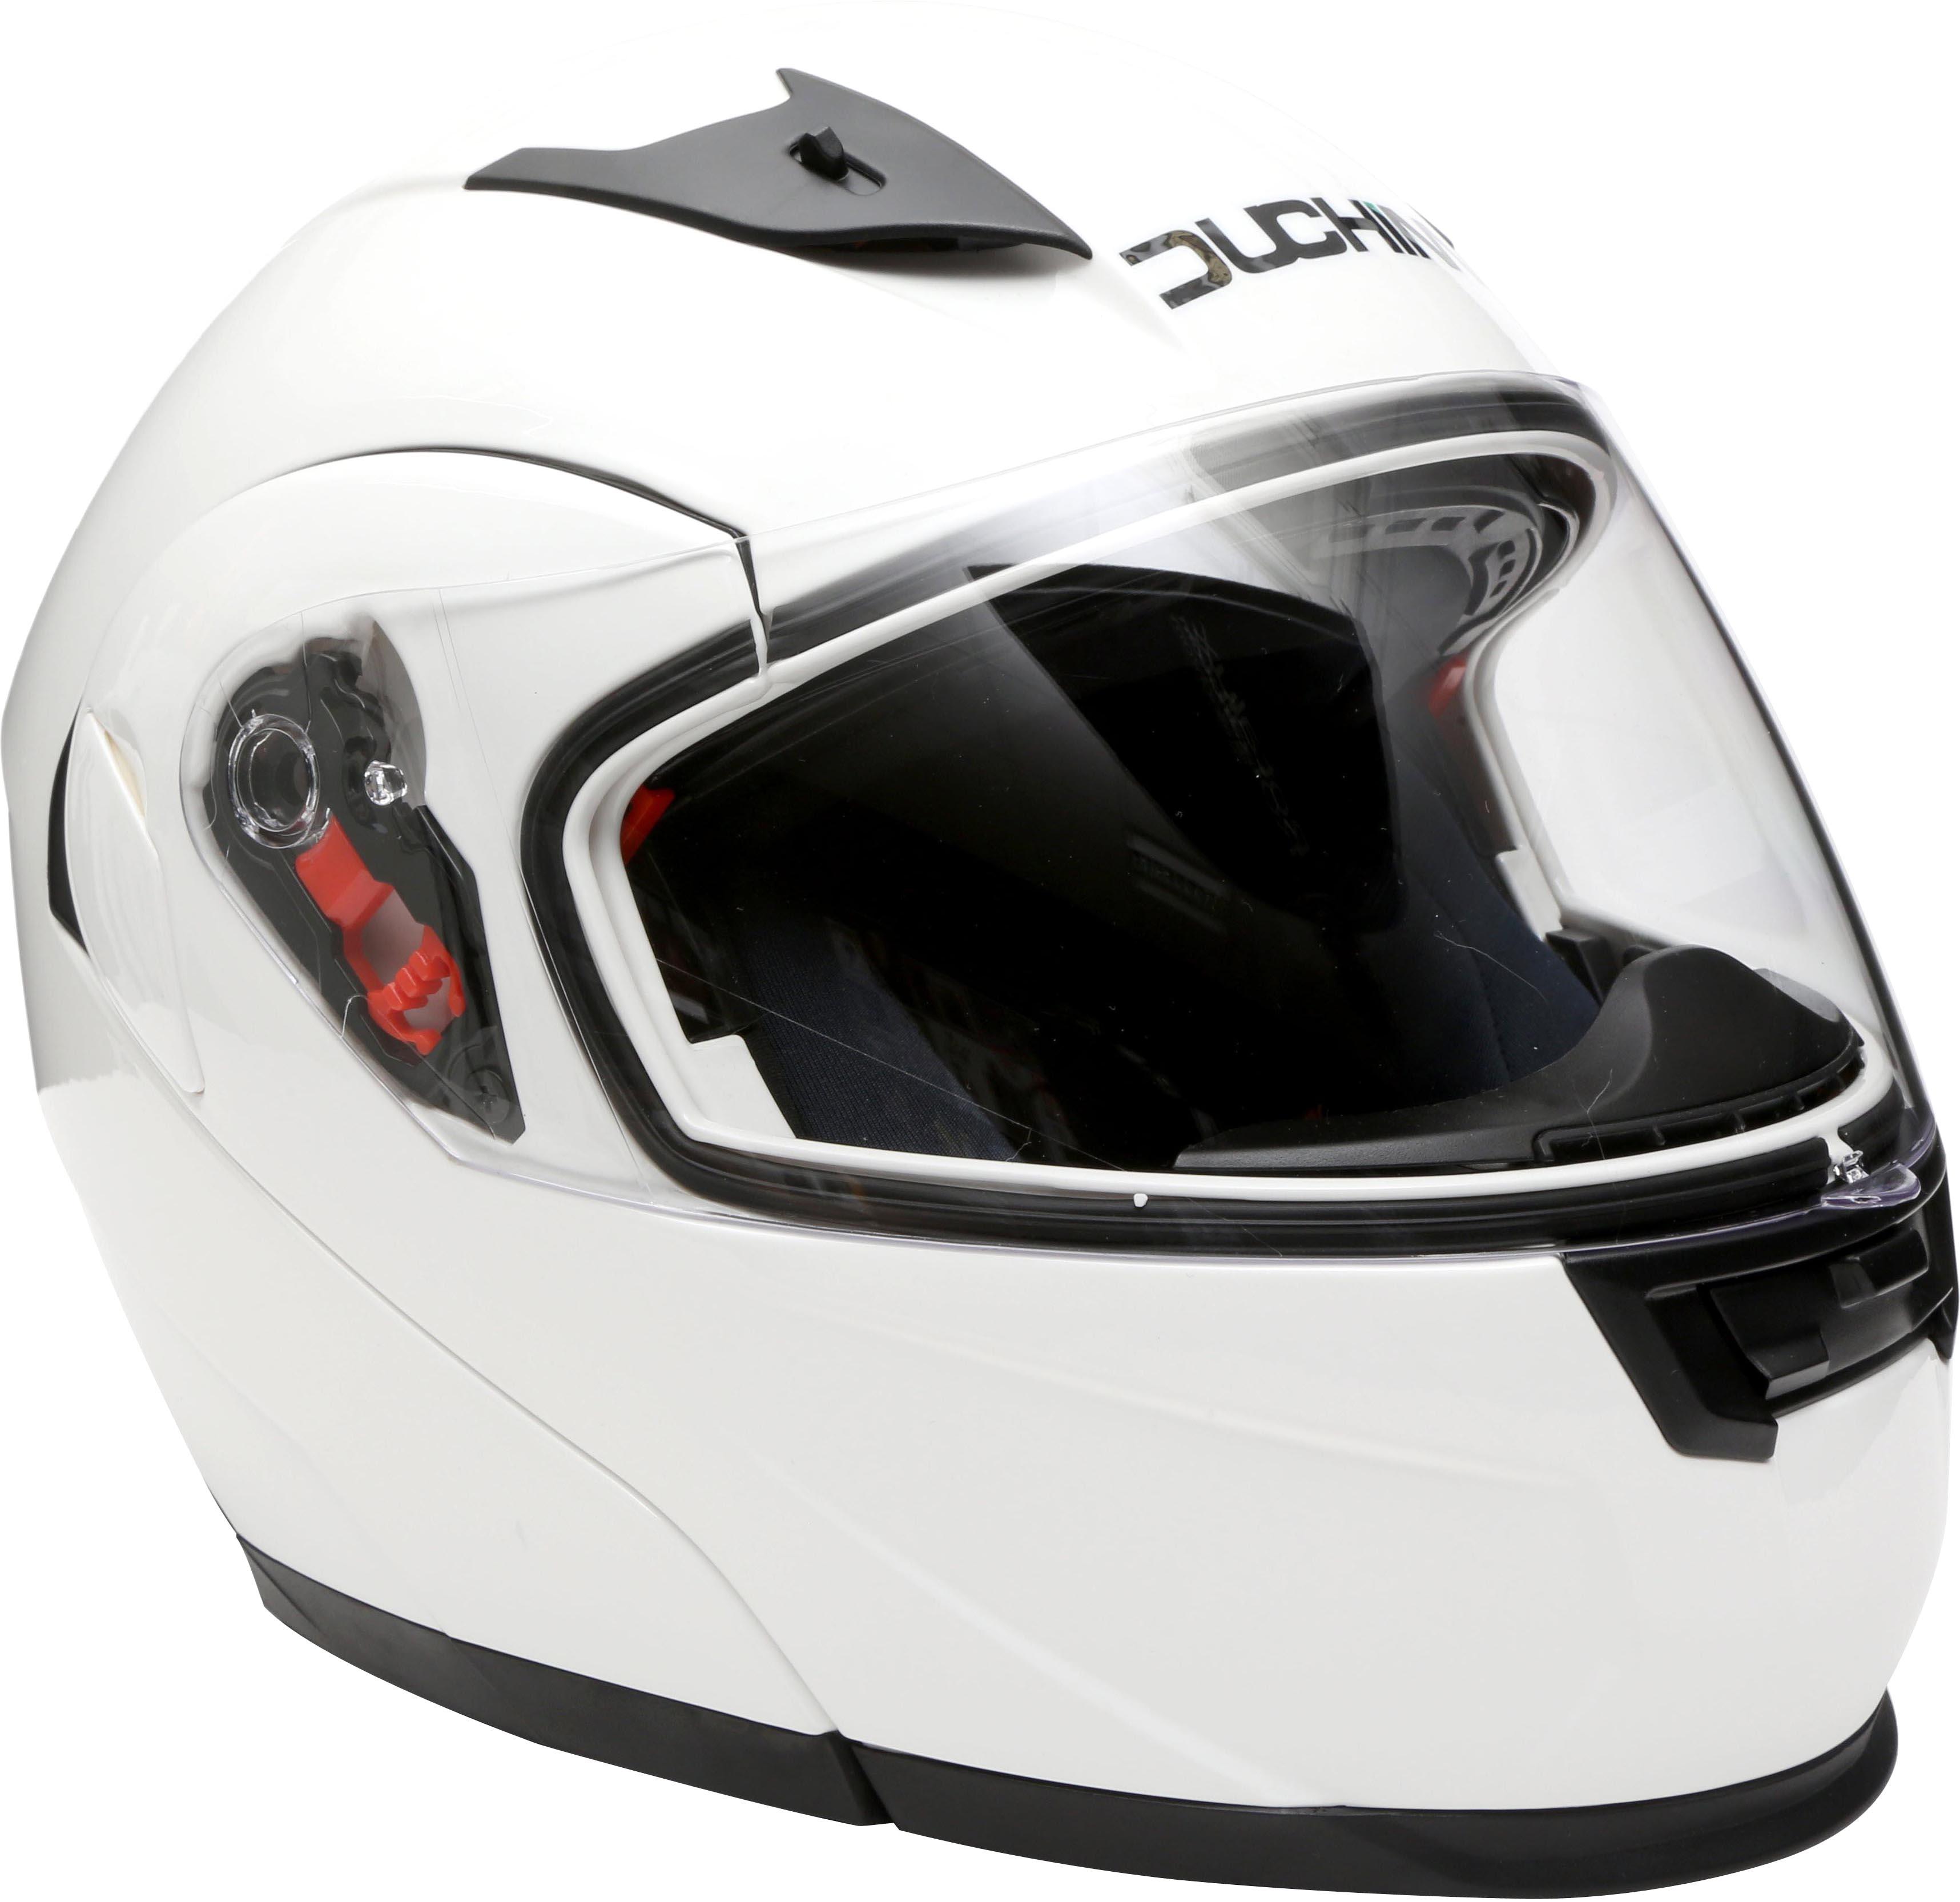 Duchinni Flip Front Helmet - White, Large